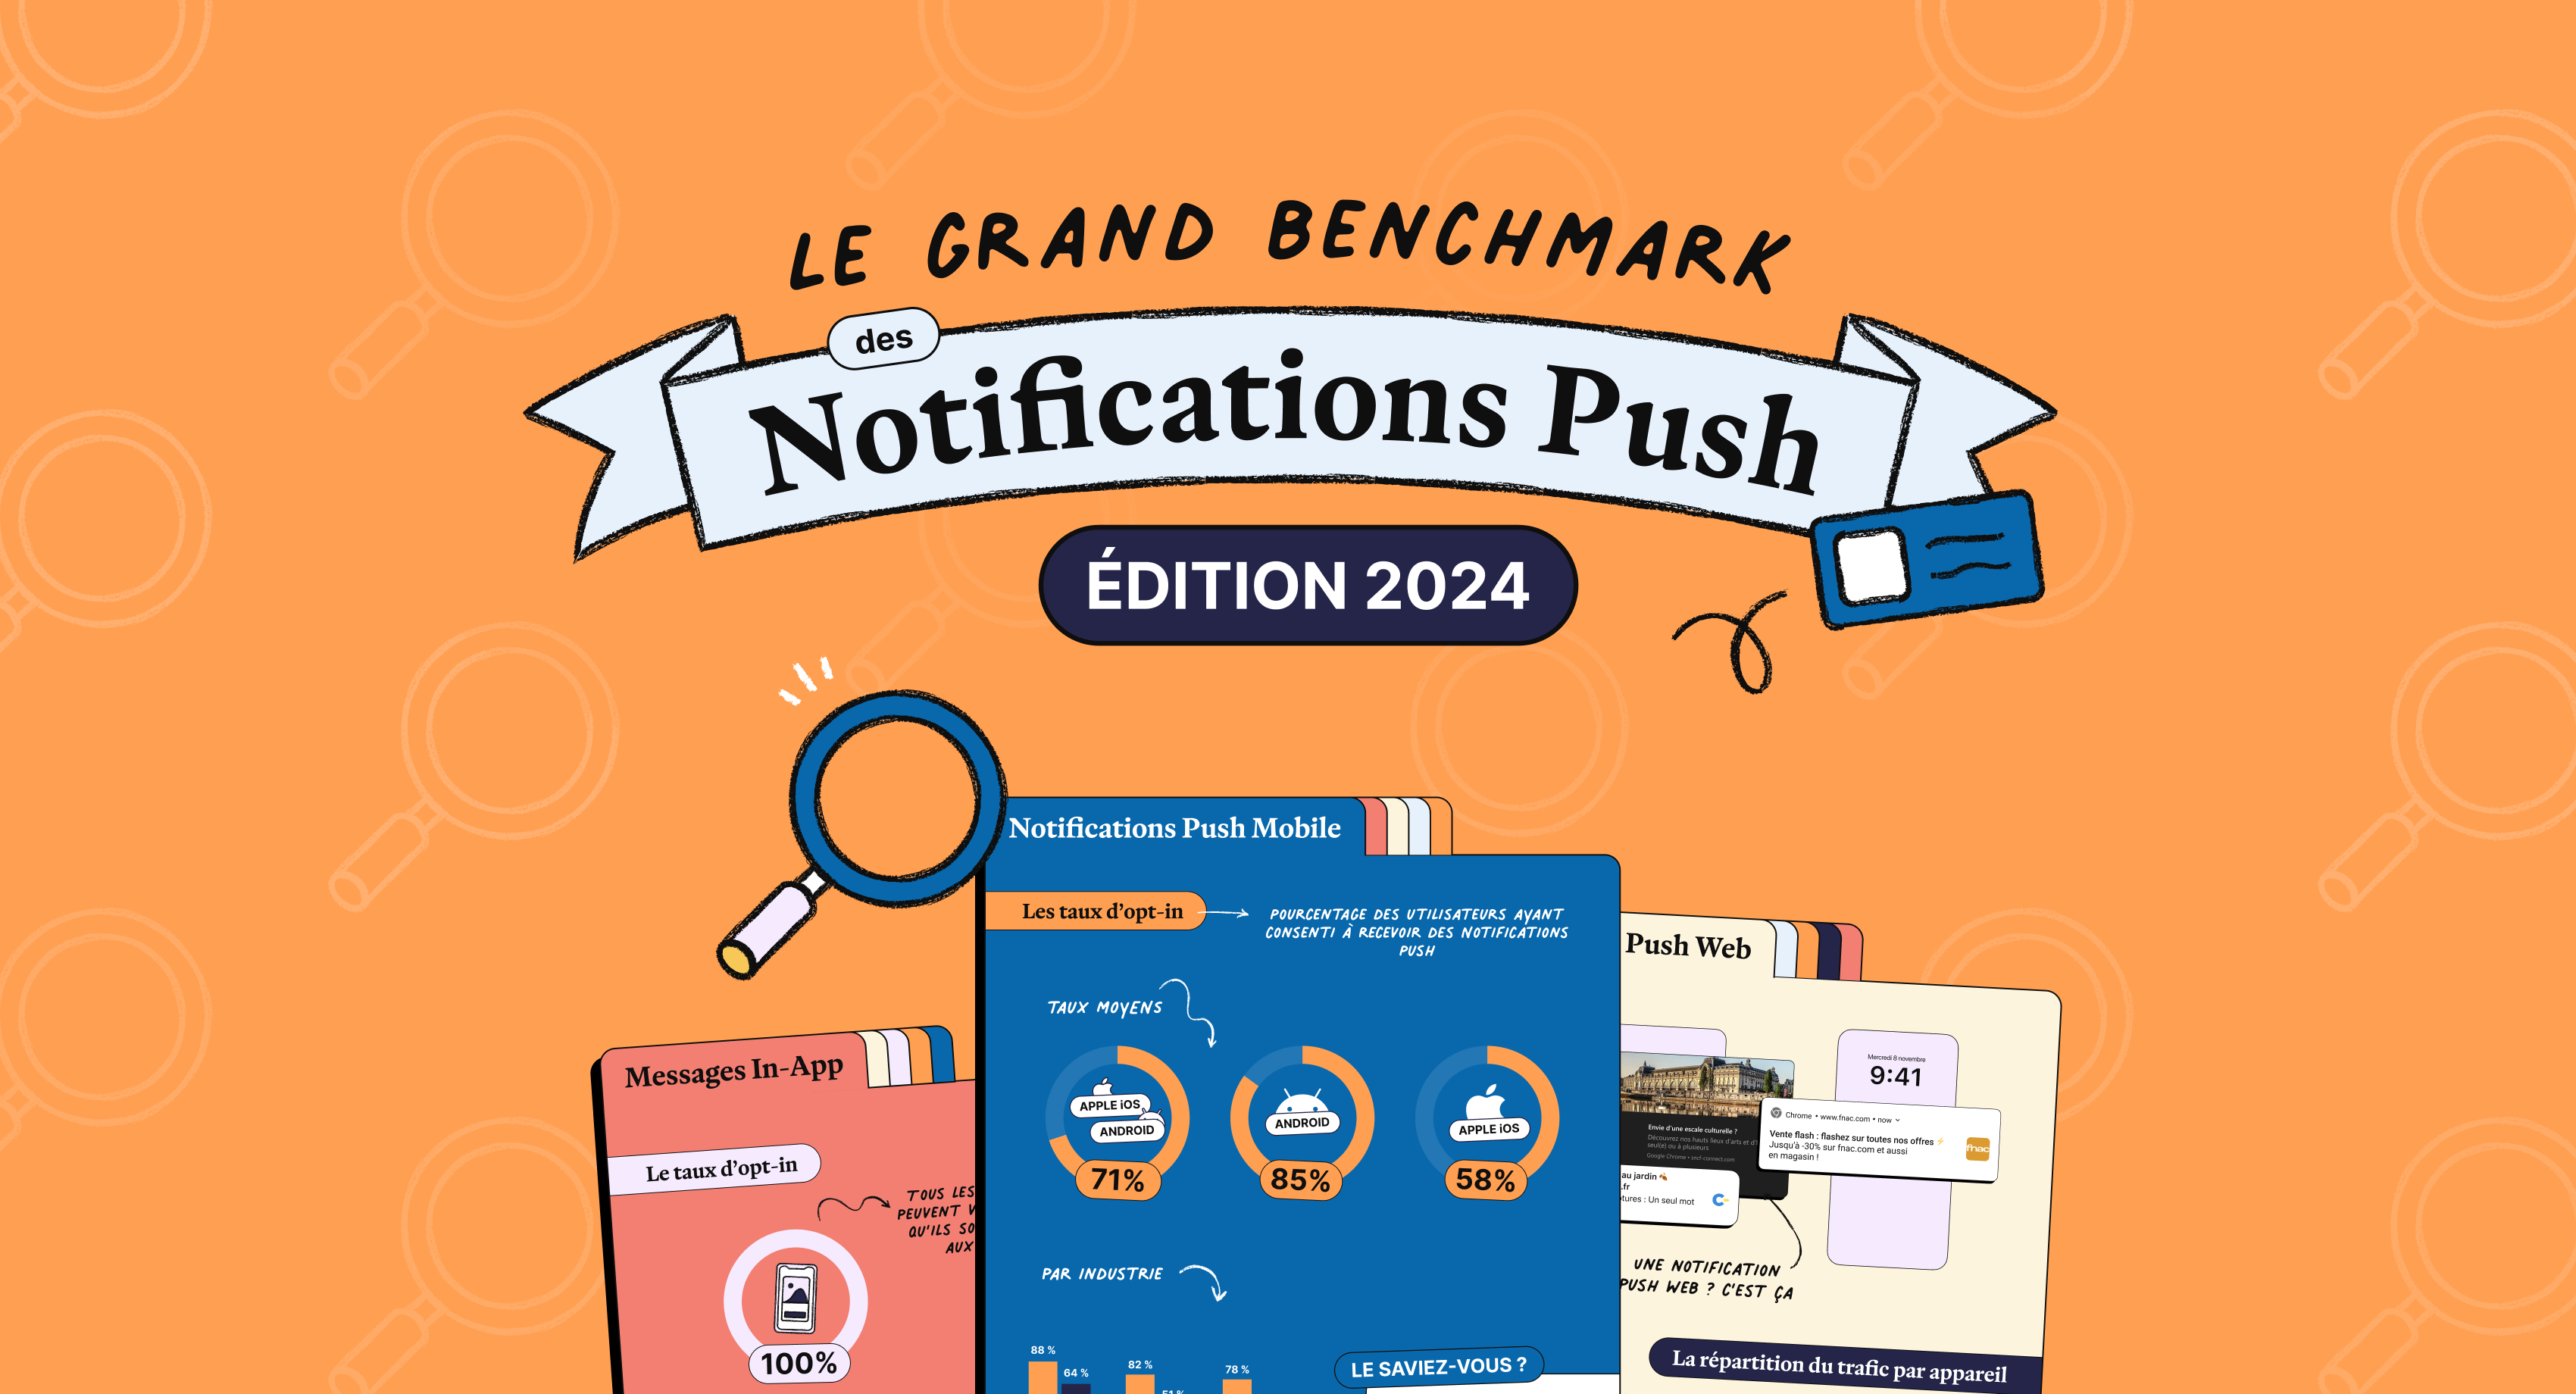 Le Grand Benchmark des Notifications Push 2024 !